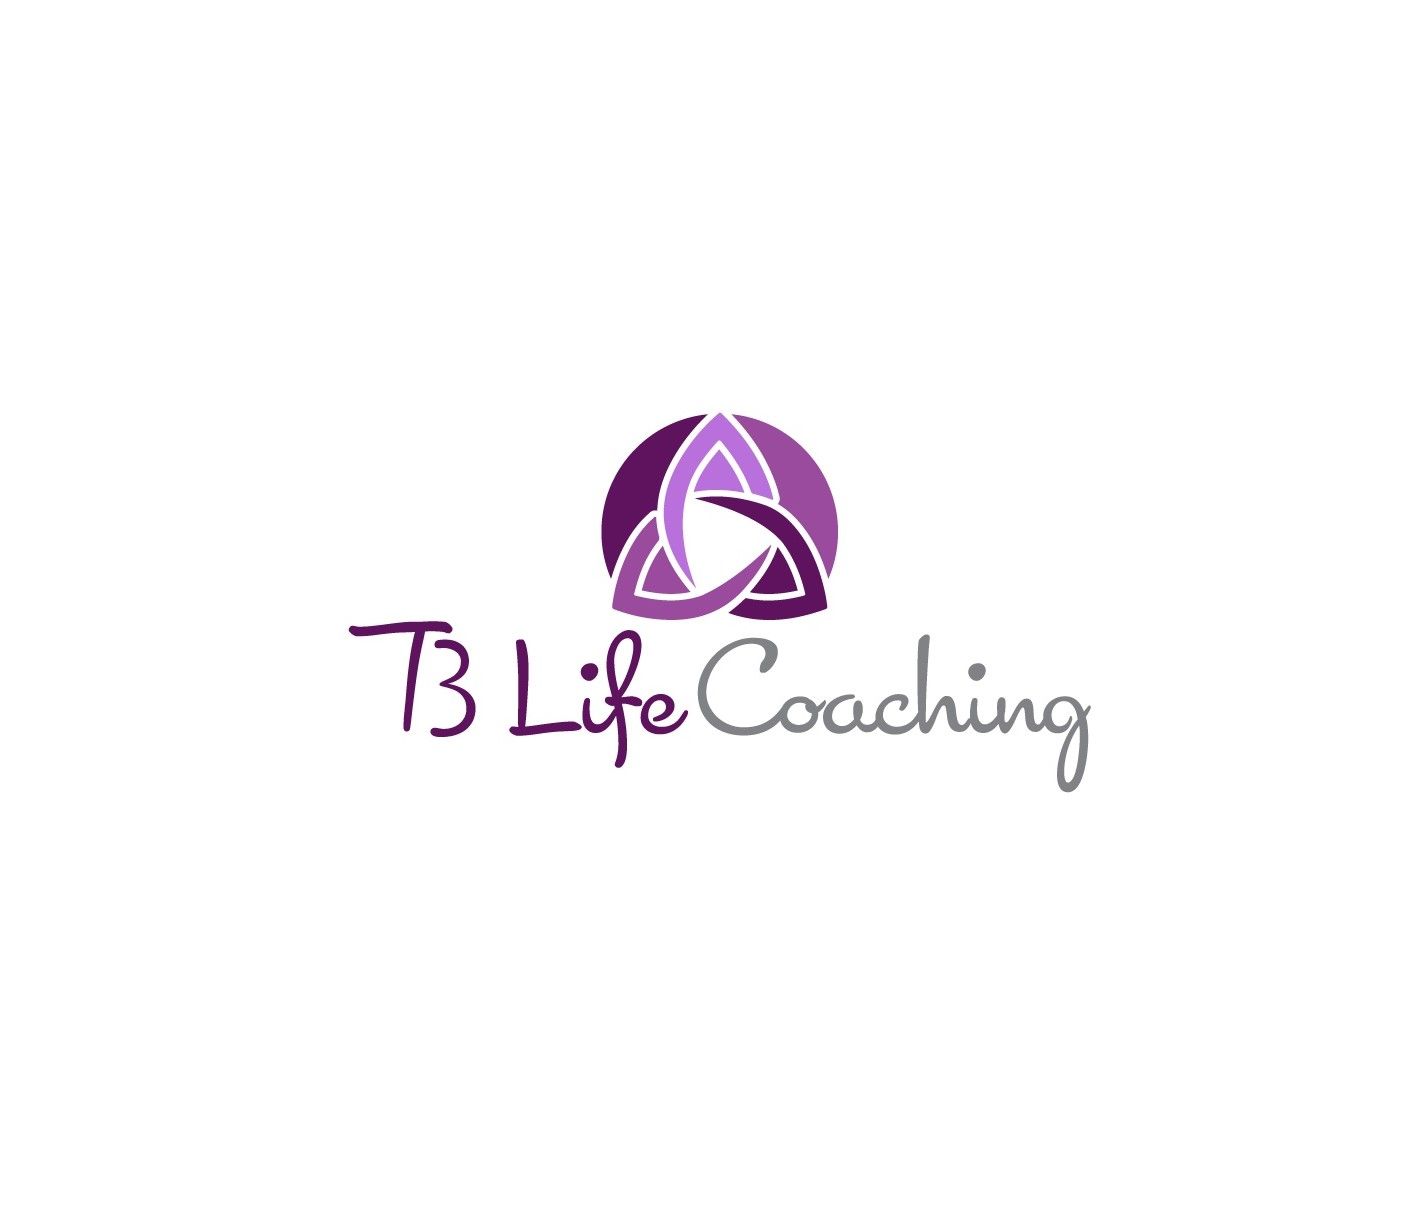 Target, Transform, Thrive - T3 Life Coaching